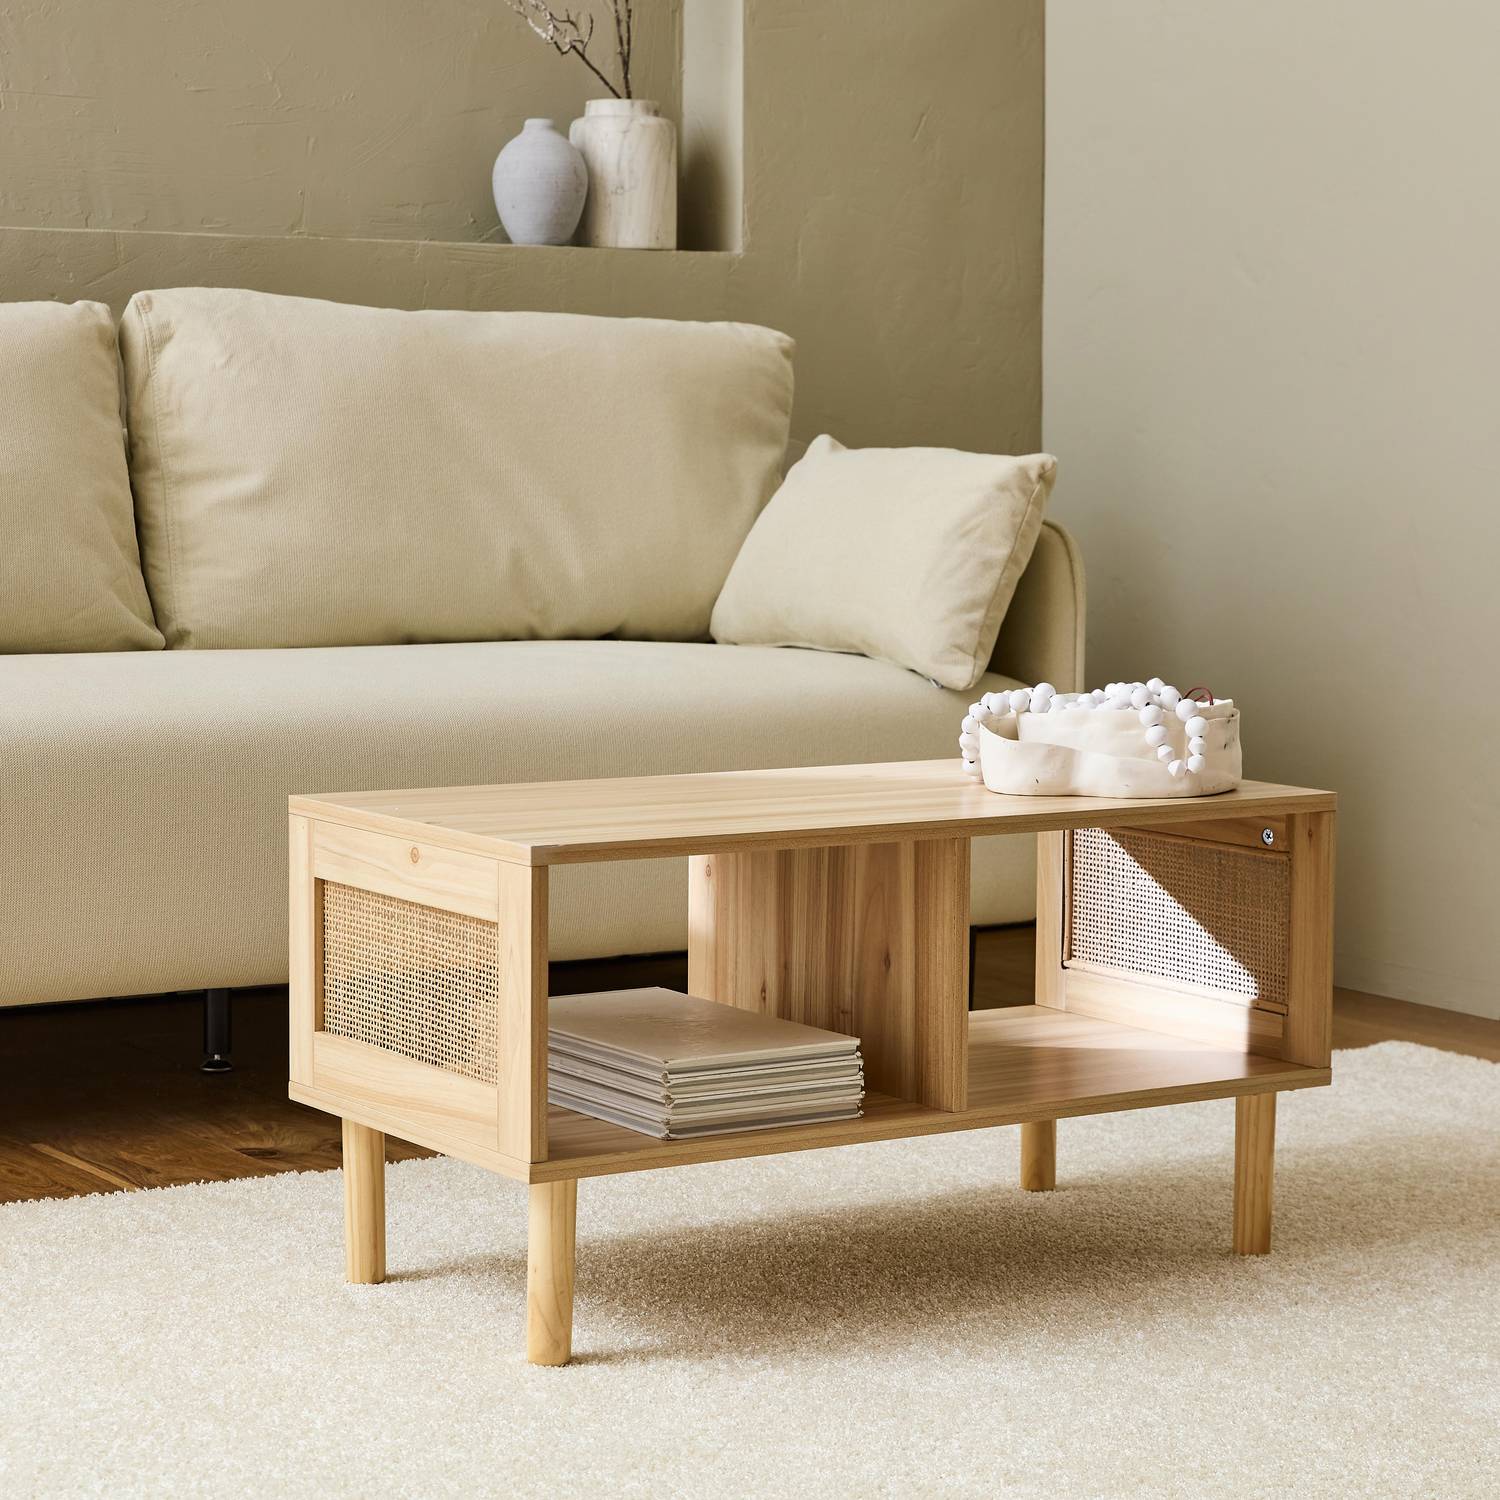 Woven rattan coffee table, 80x40x40cm, Camargue, Natural wood colour Photo1